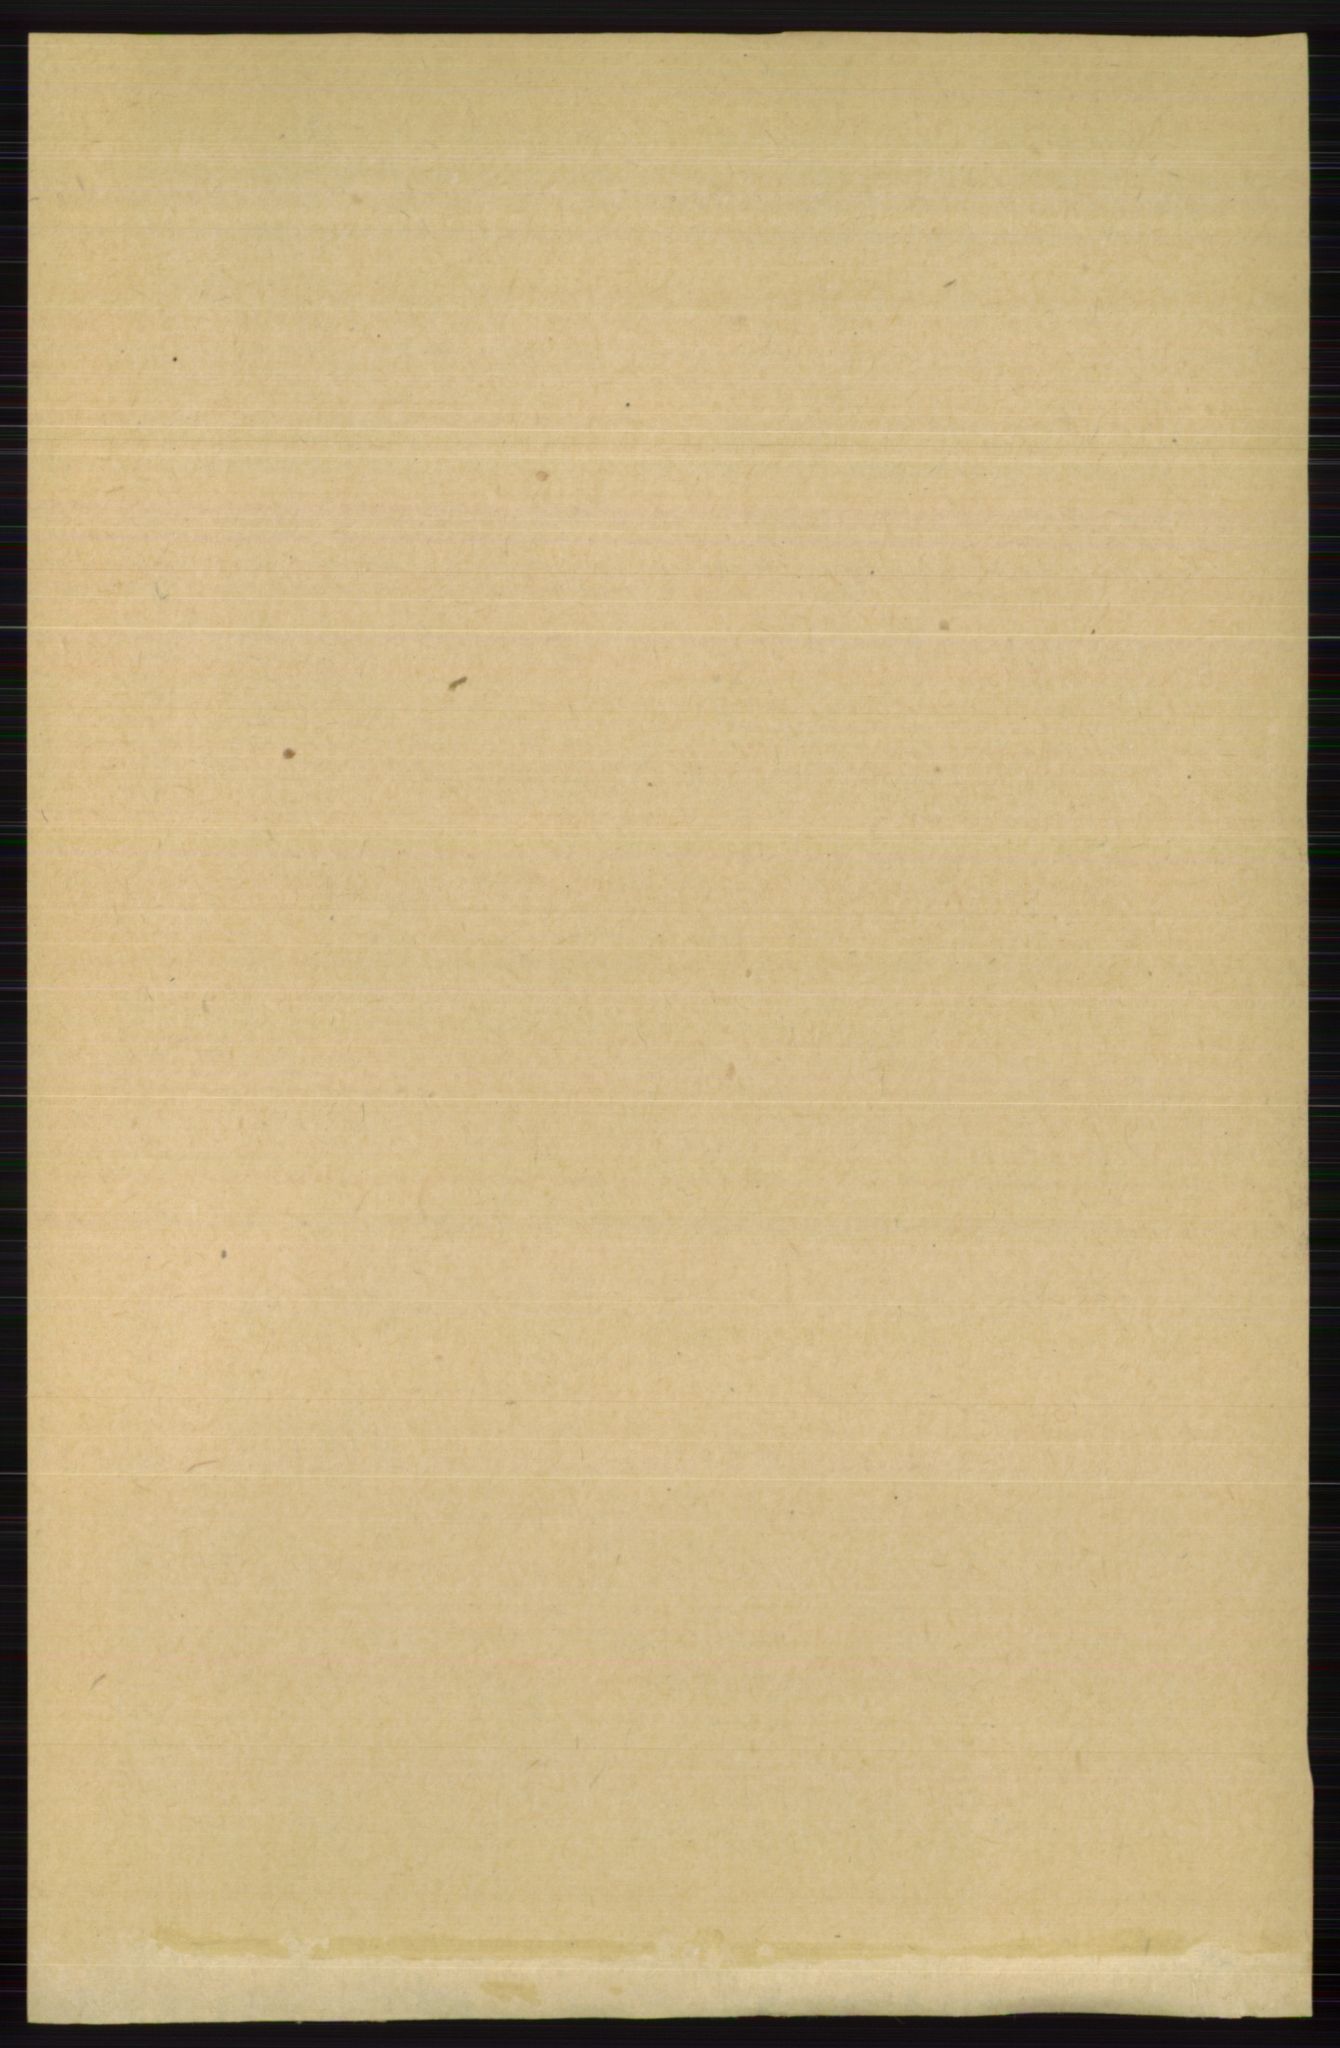 RA, Folketelling 1891 for 0633 Nore herred, 1891, s. 740